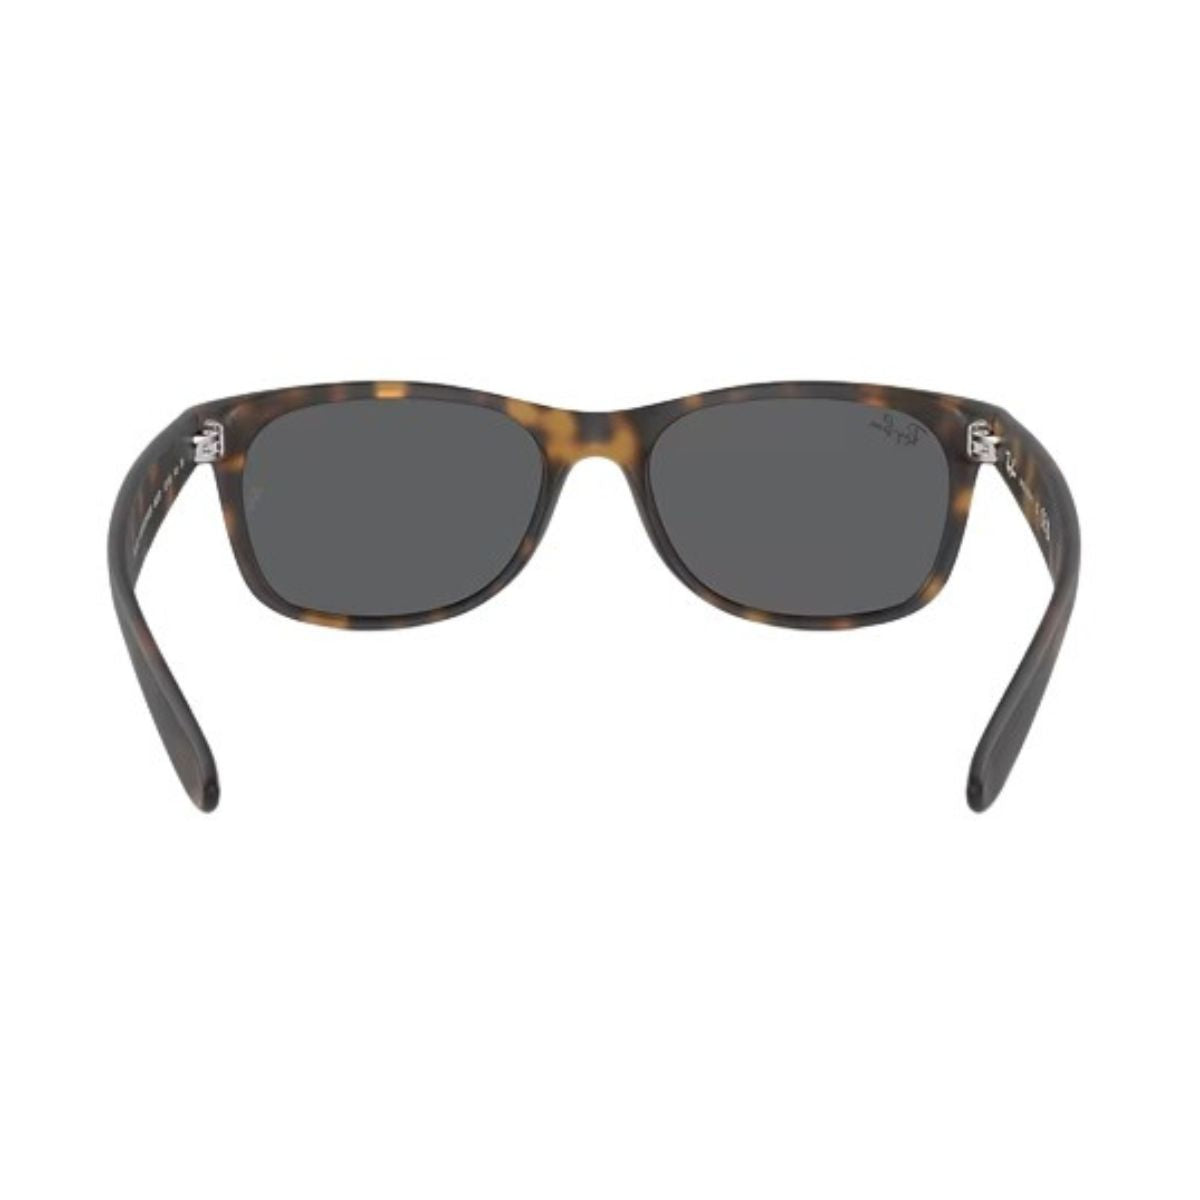 "Stylish  Ray Ban 2132 865/B1 Wayfarer Frame UV Protection Sunglasses At Optorium"